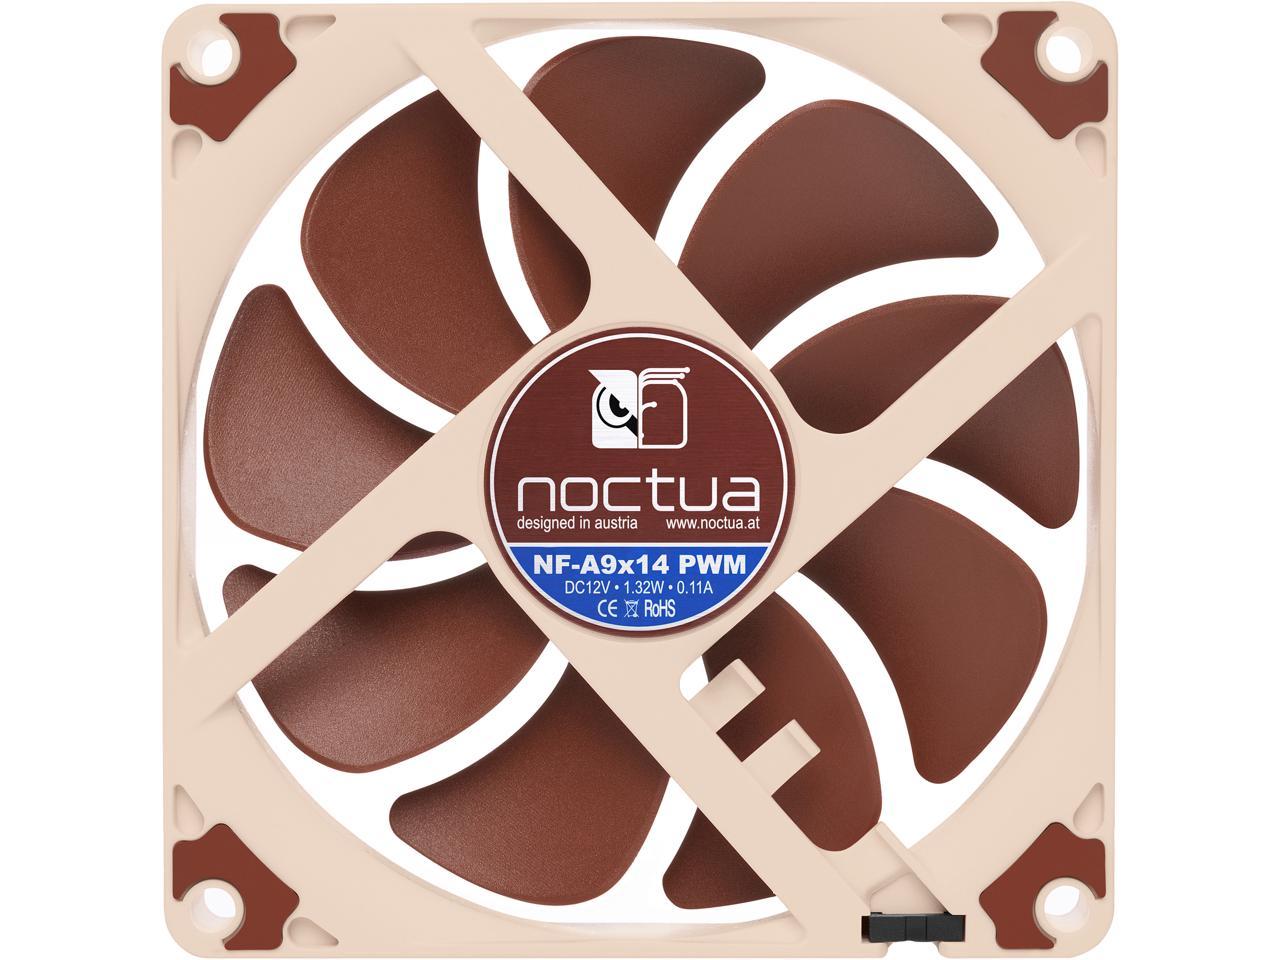 Noctua NF-A9x14 PWM, Premium Quiet Fan, 4-Pin (92x14mm, Brown)